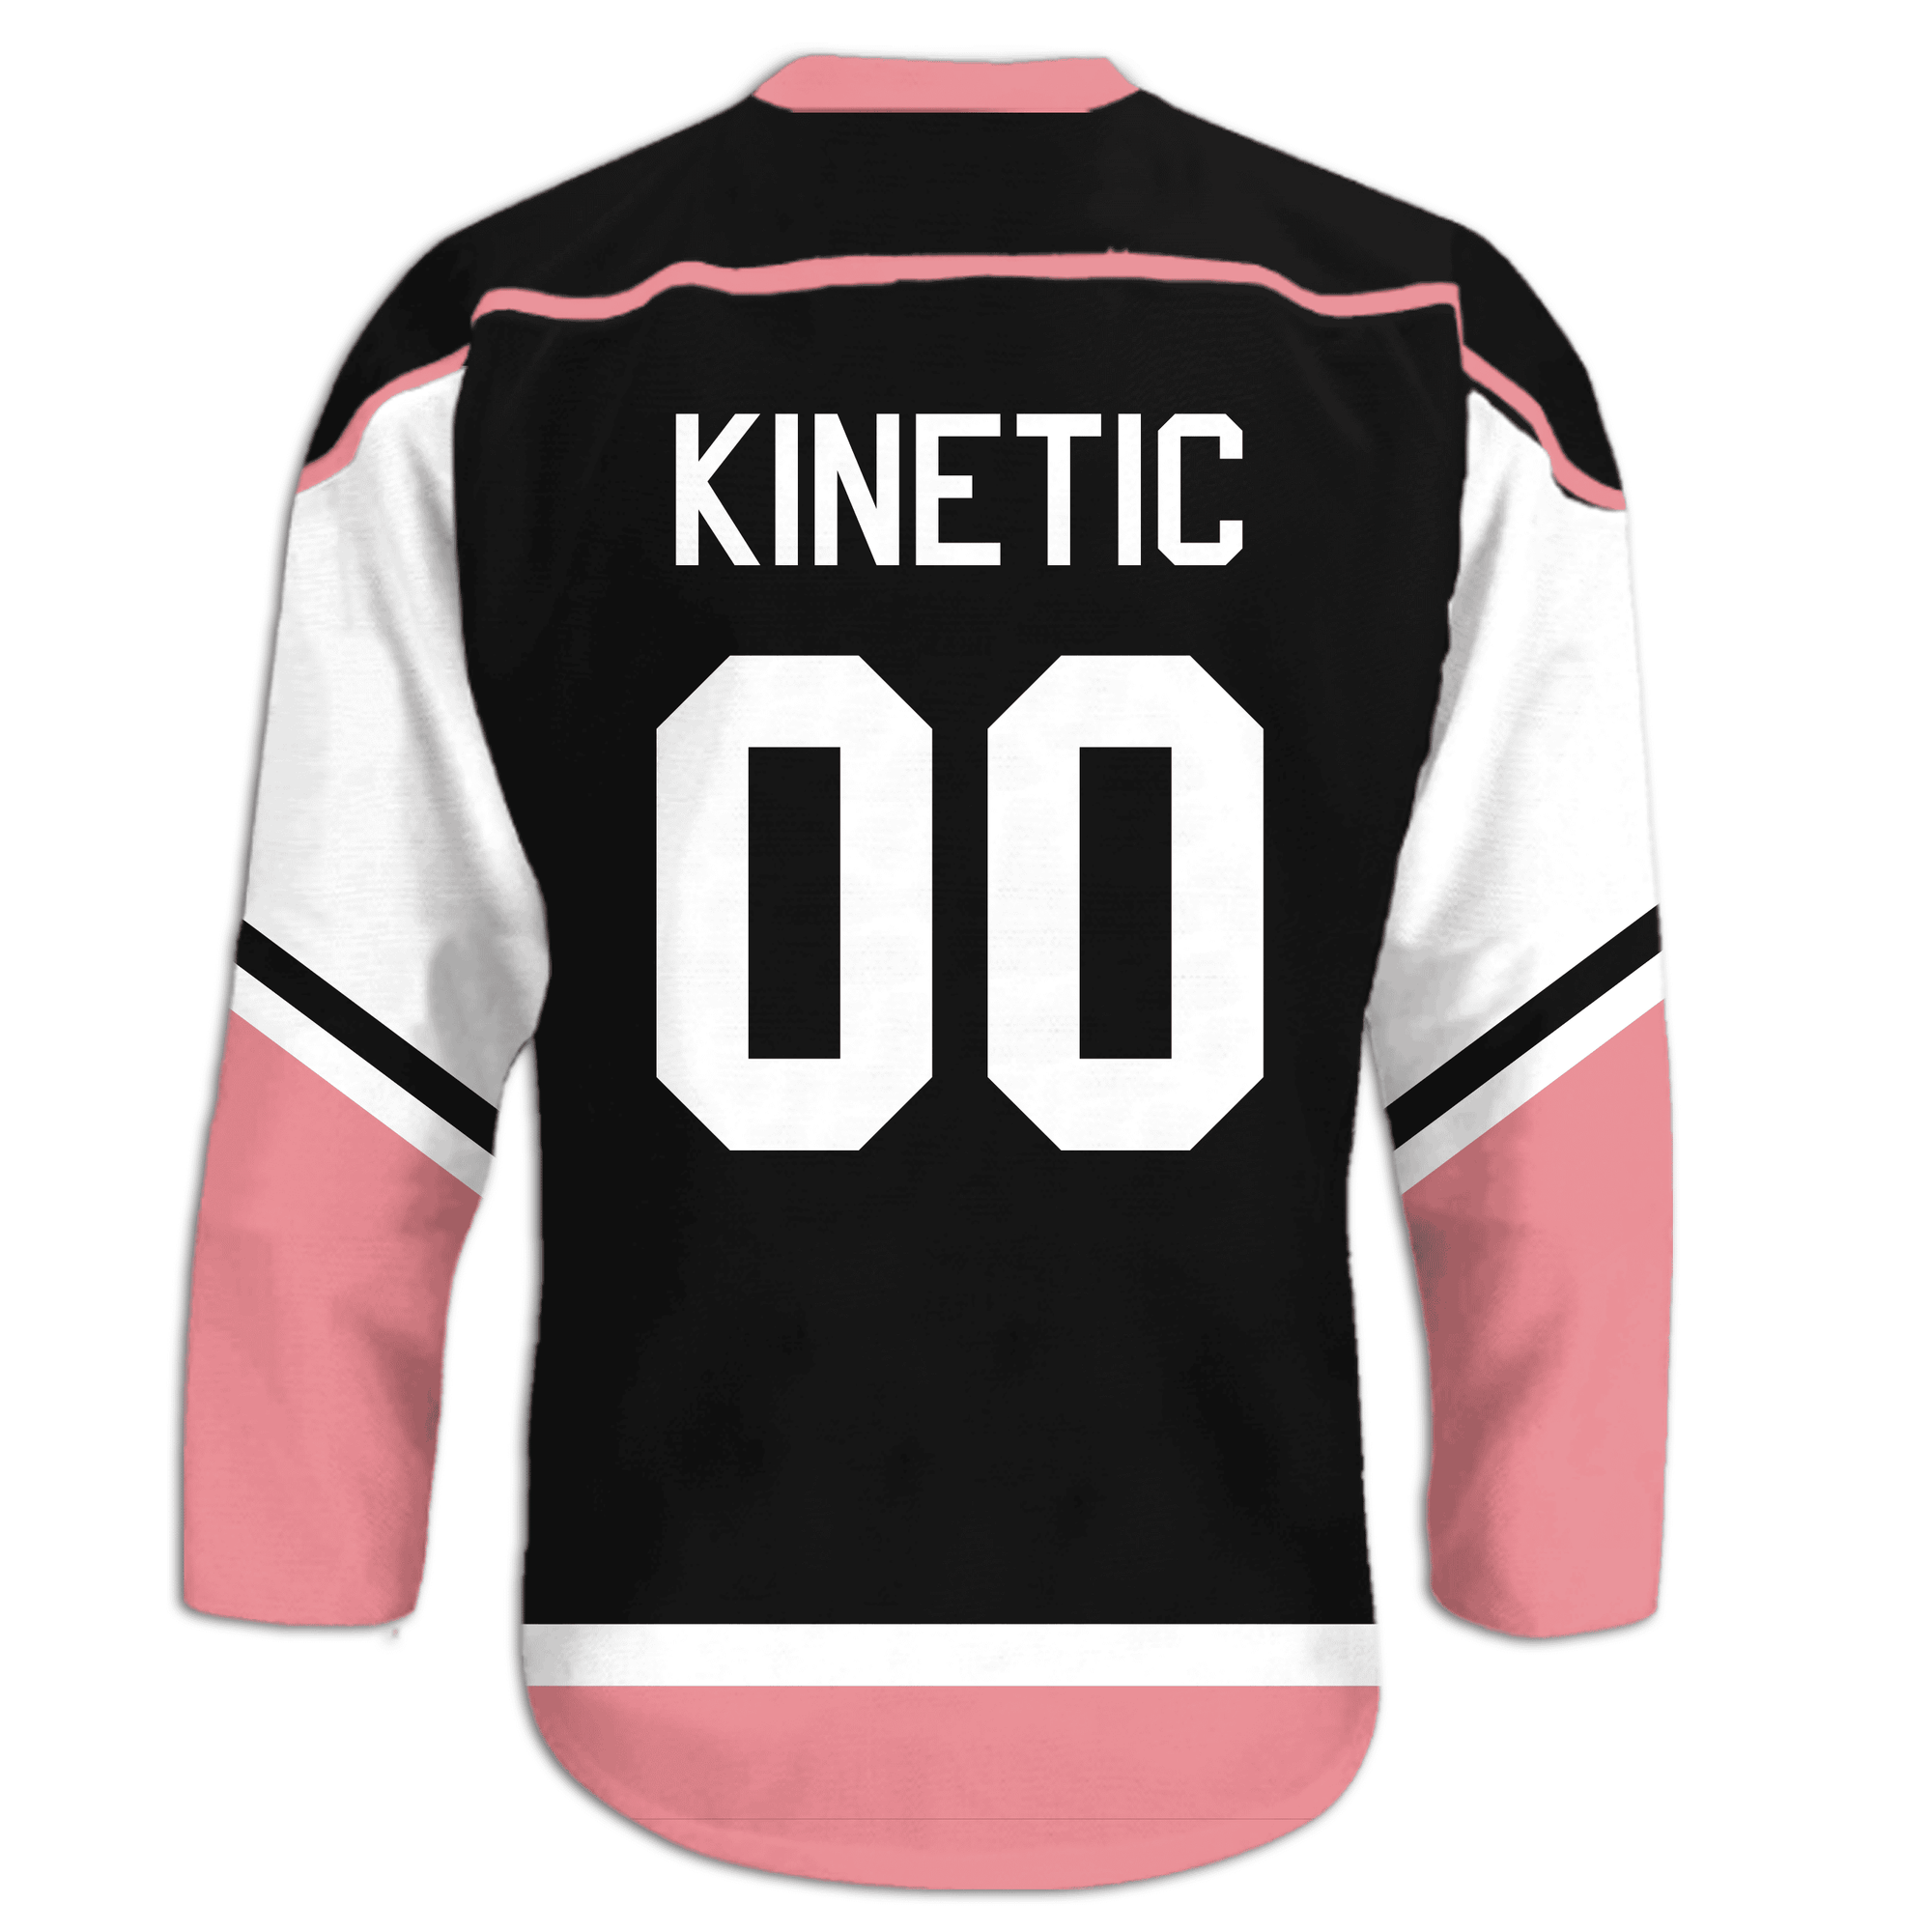 Kappa Delta - Black Pink - Hockey Jersey